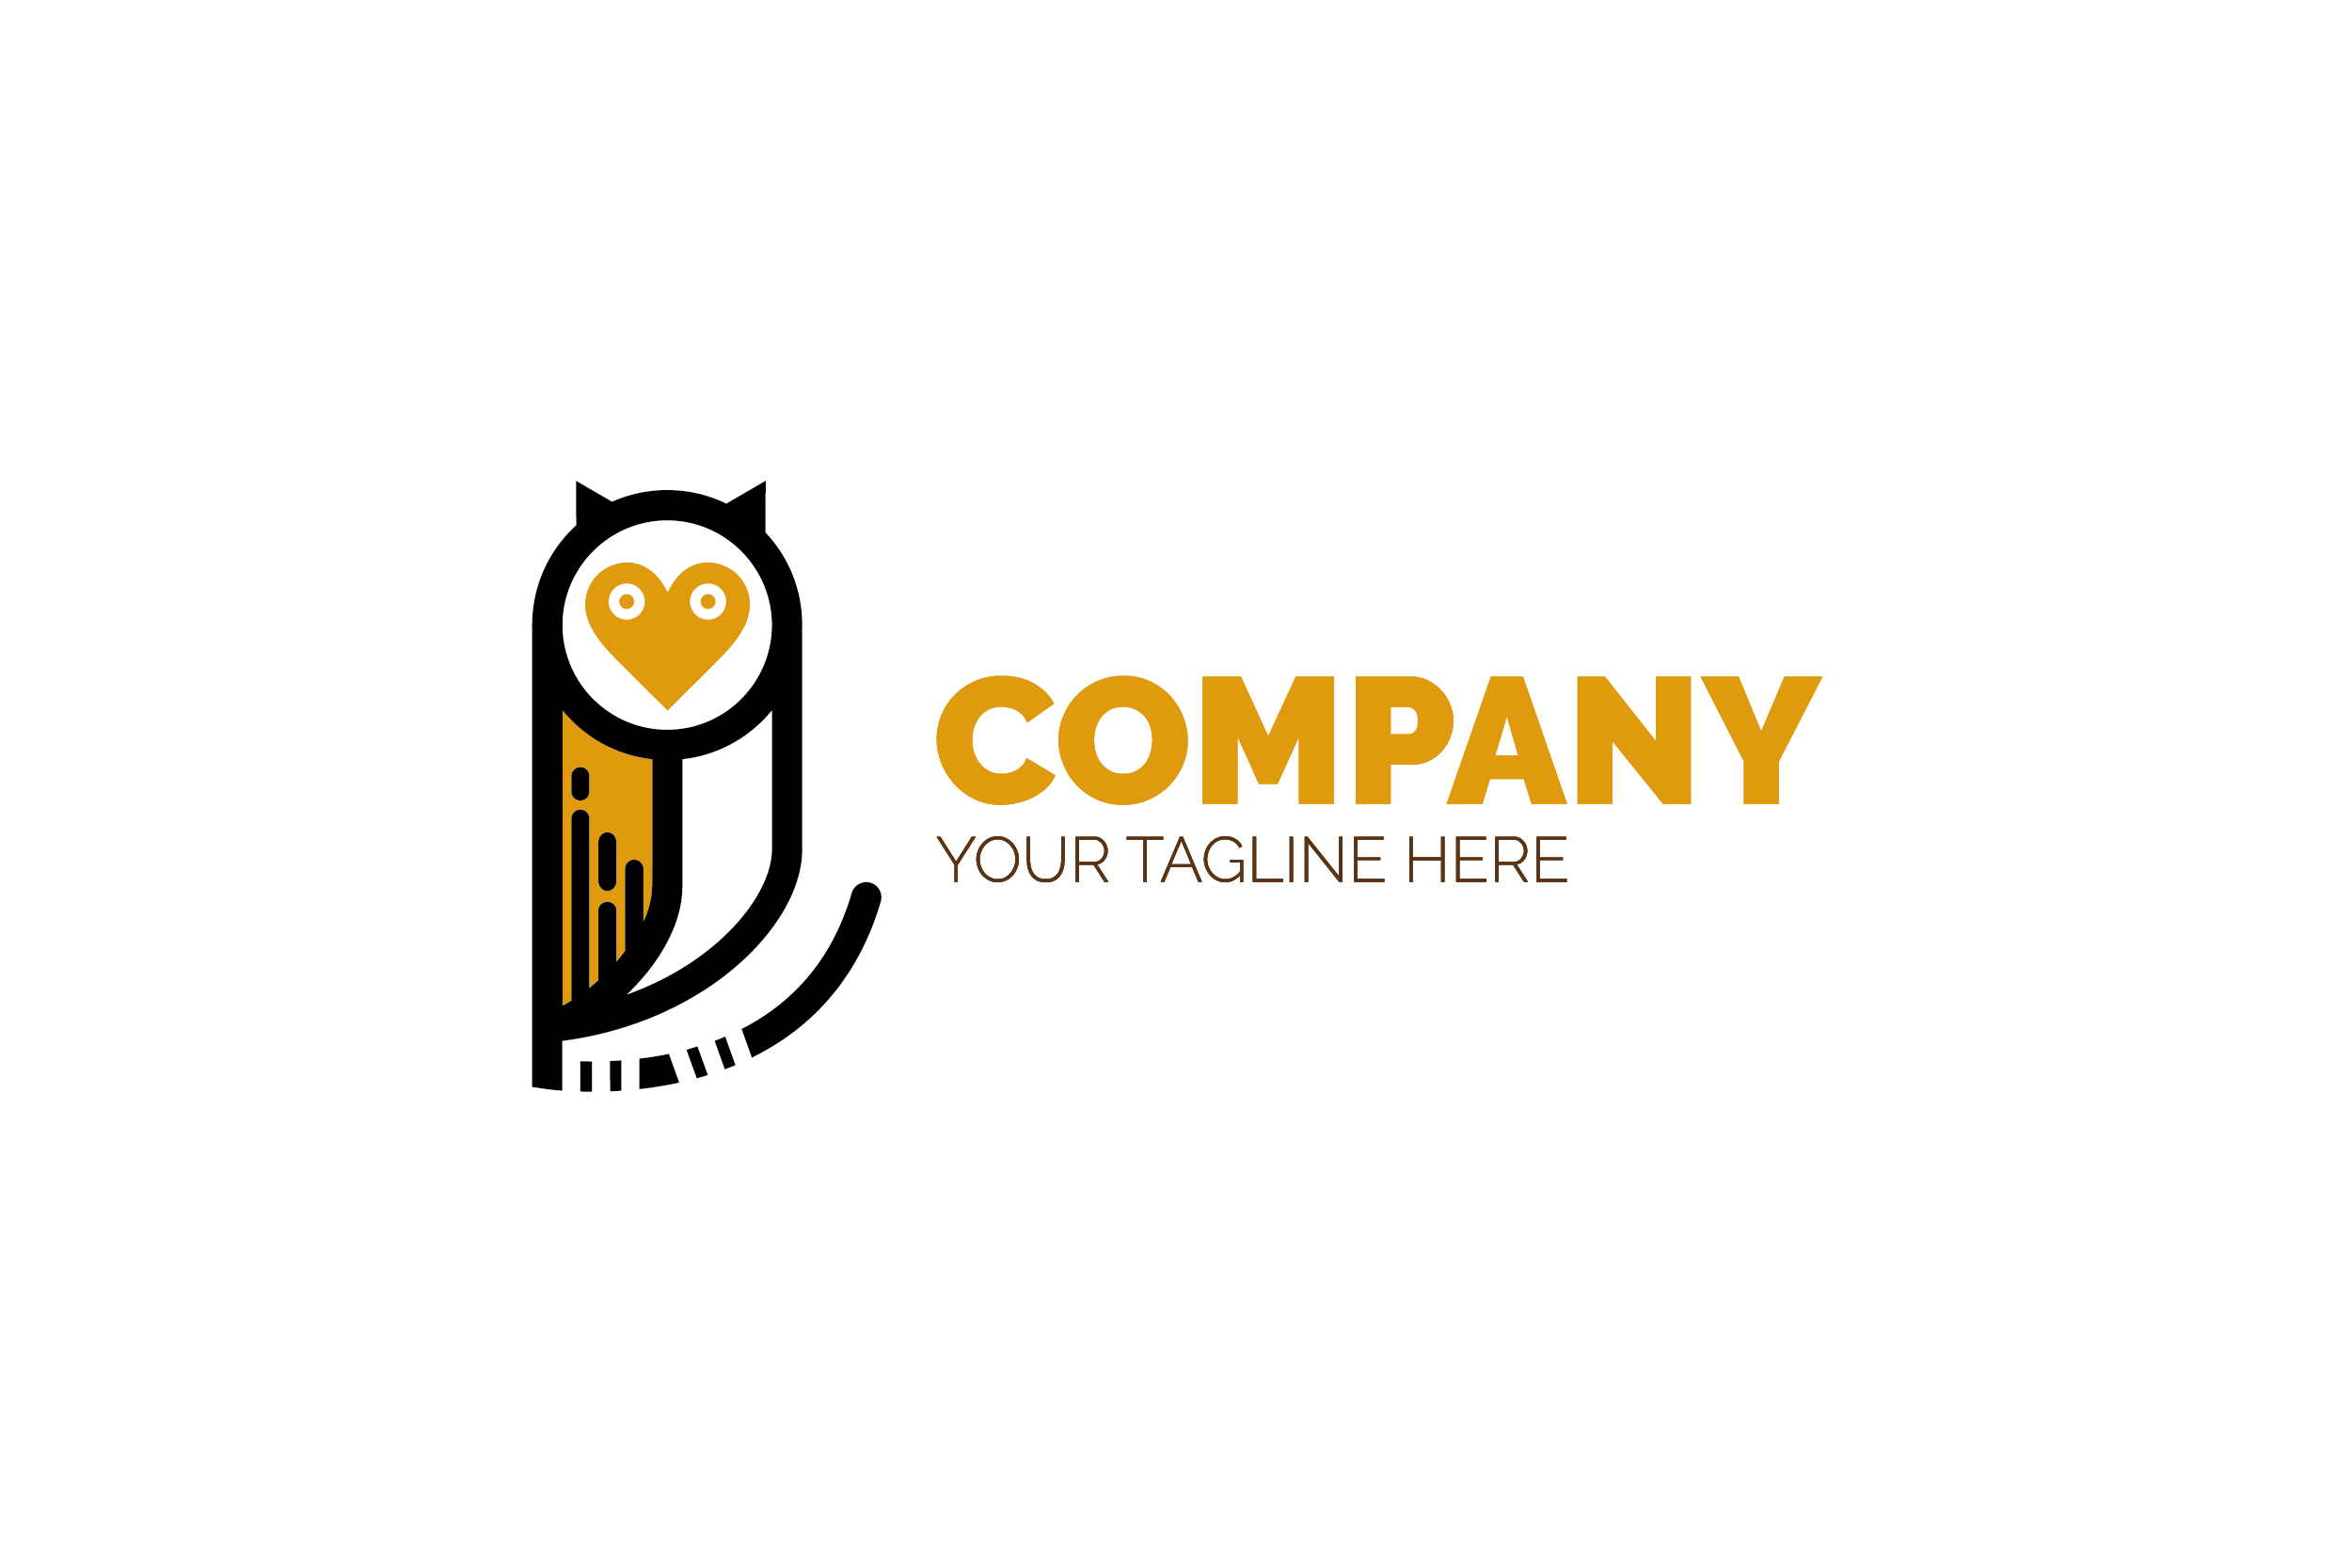 Owl Feet Logo - A classy bold simple minimalist logo design of a cute iconic Wise